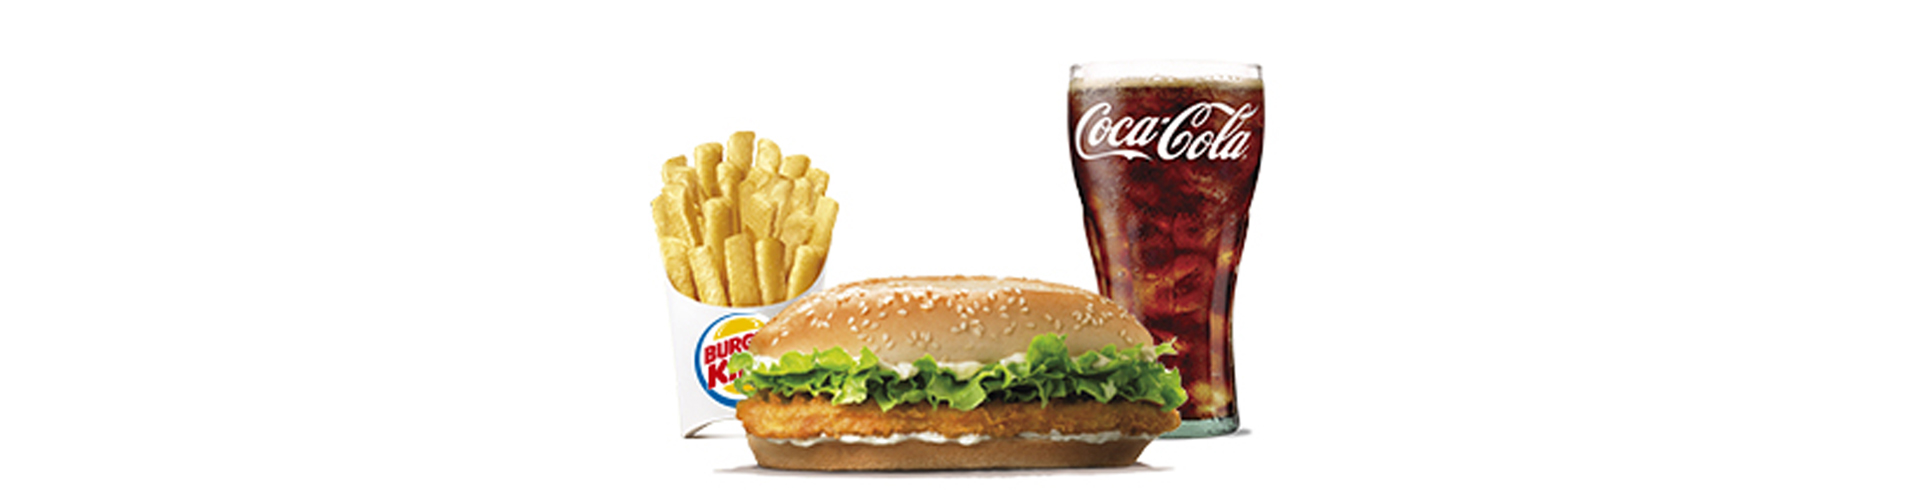 menu-long-chicken-burgerking-40001720-limonada-aros